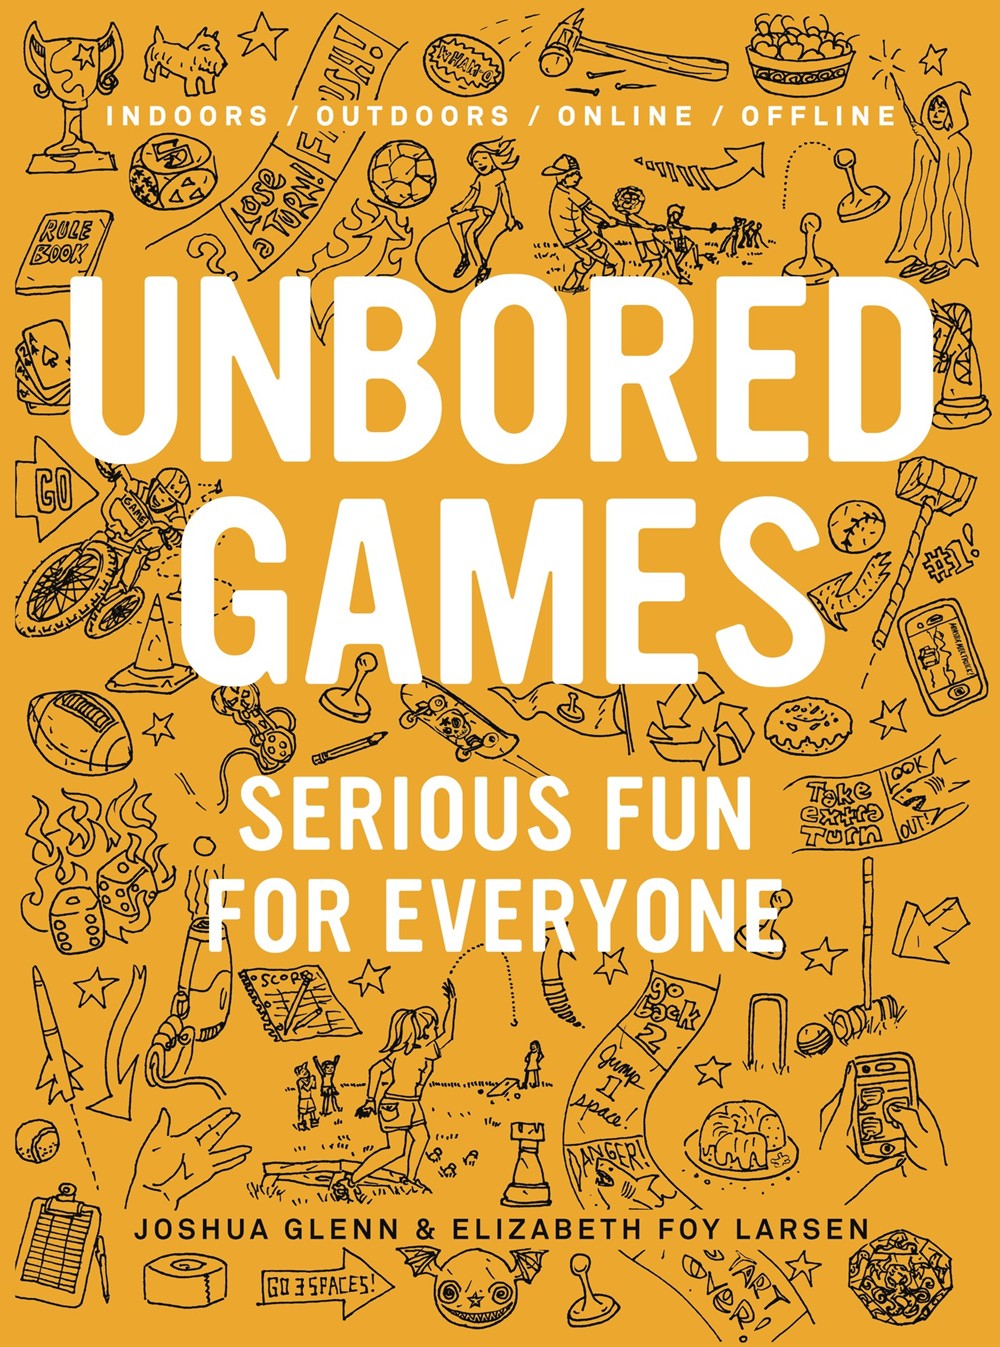 Family Event: UNBORED Games by Joshua Glenn & Elizabeth Foy Larsen